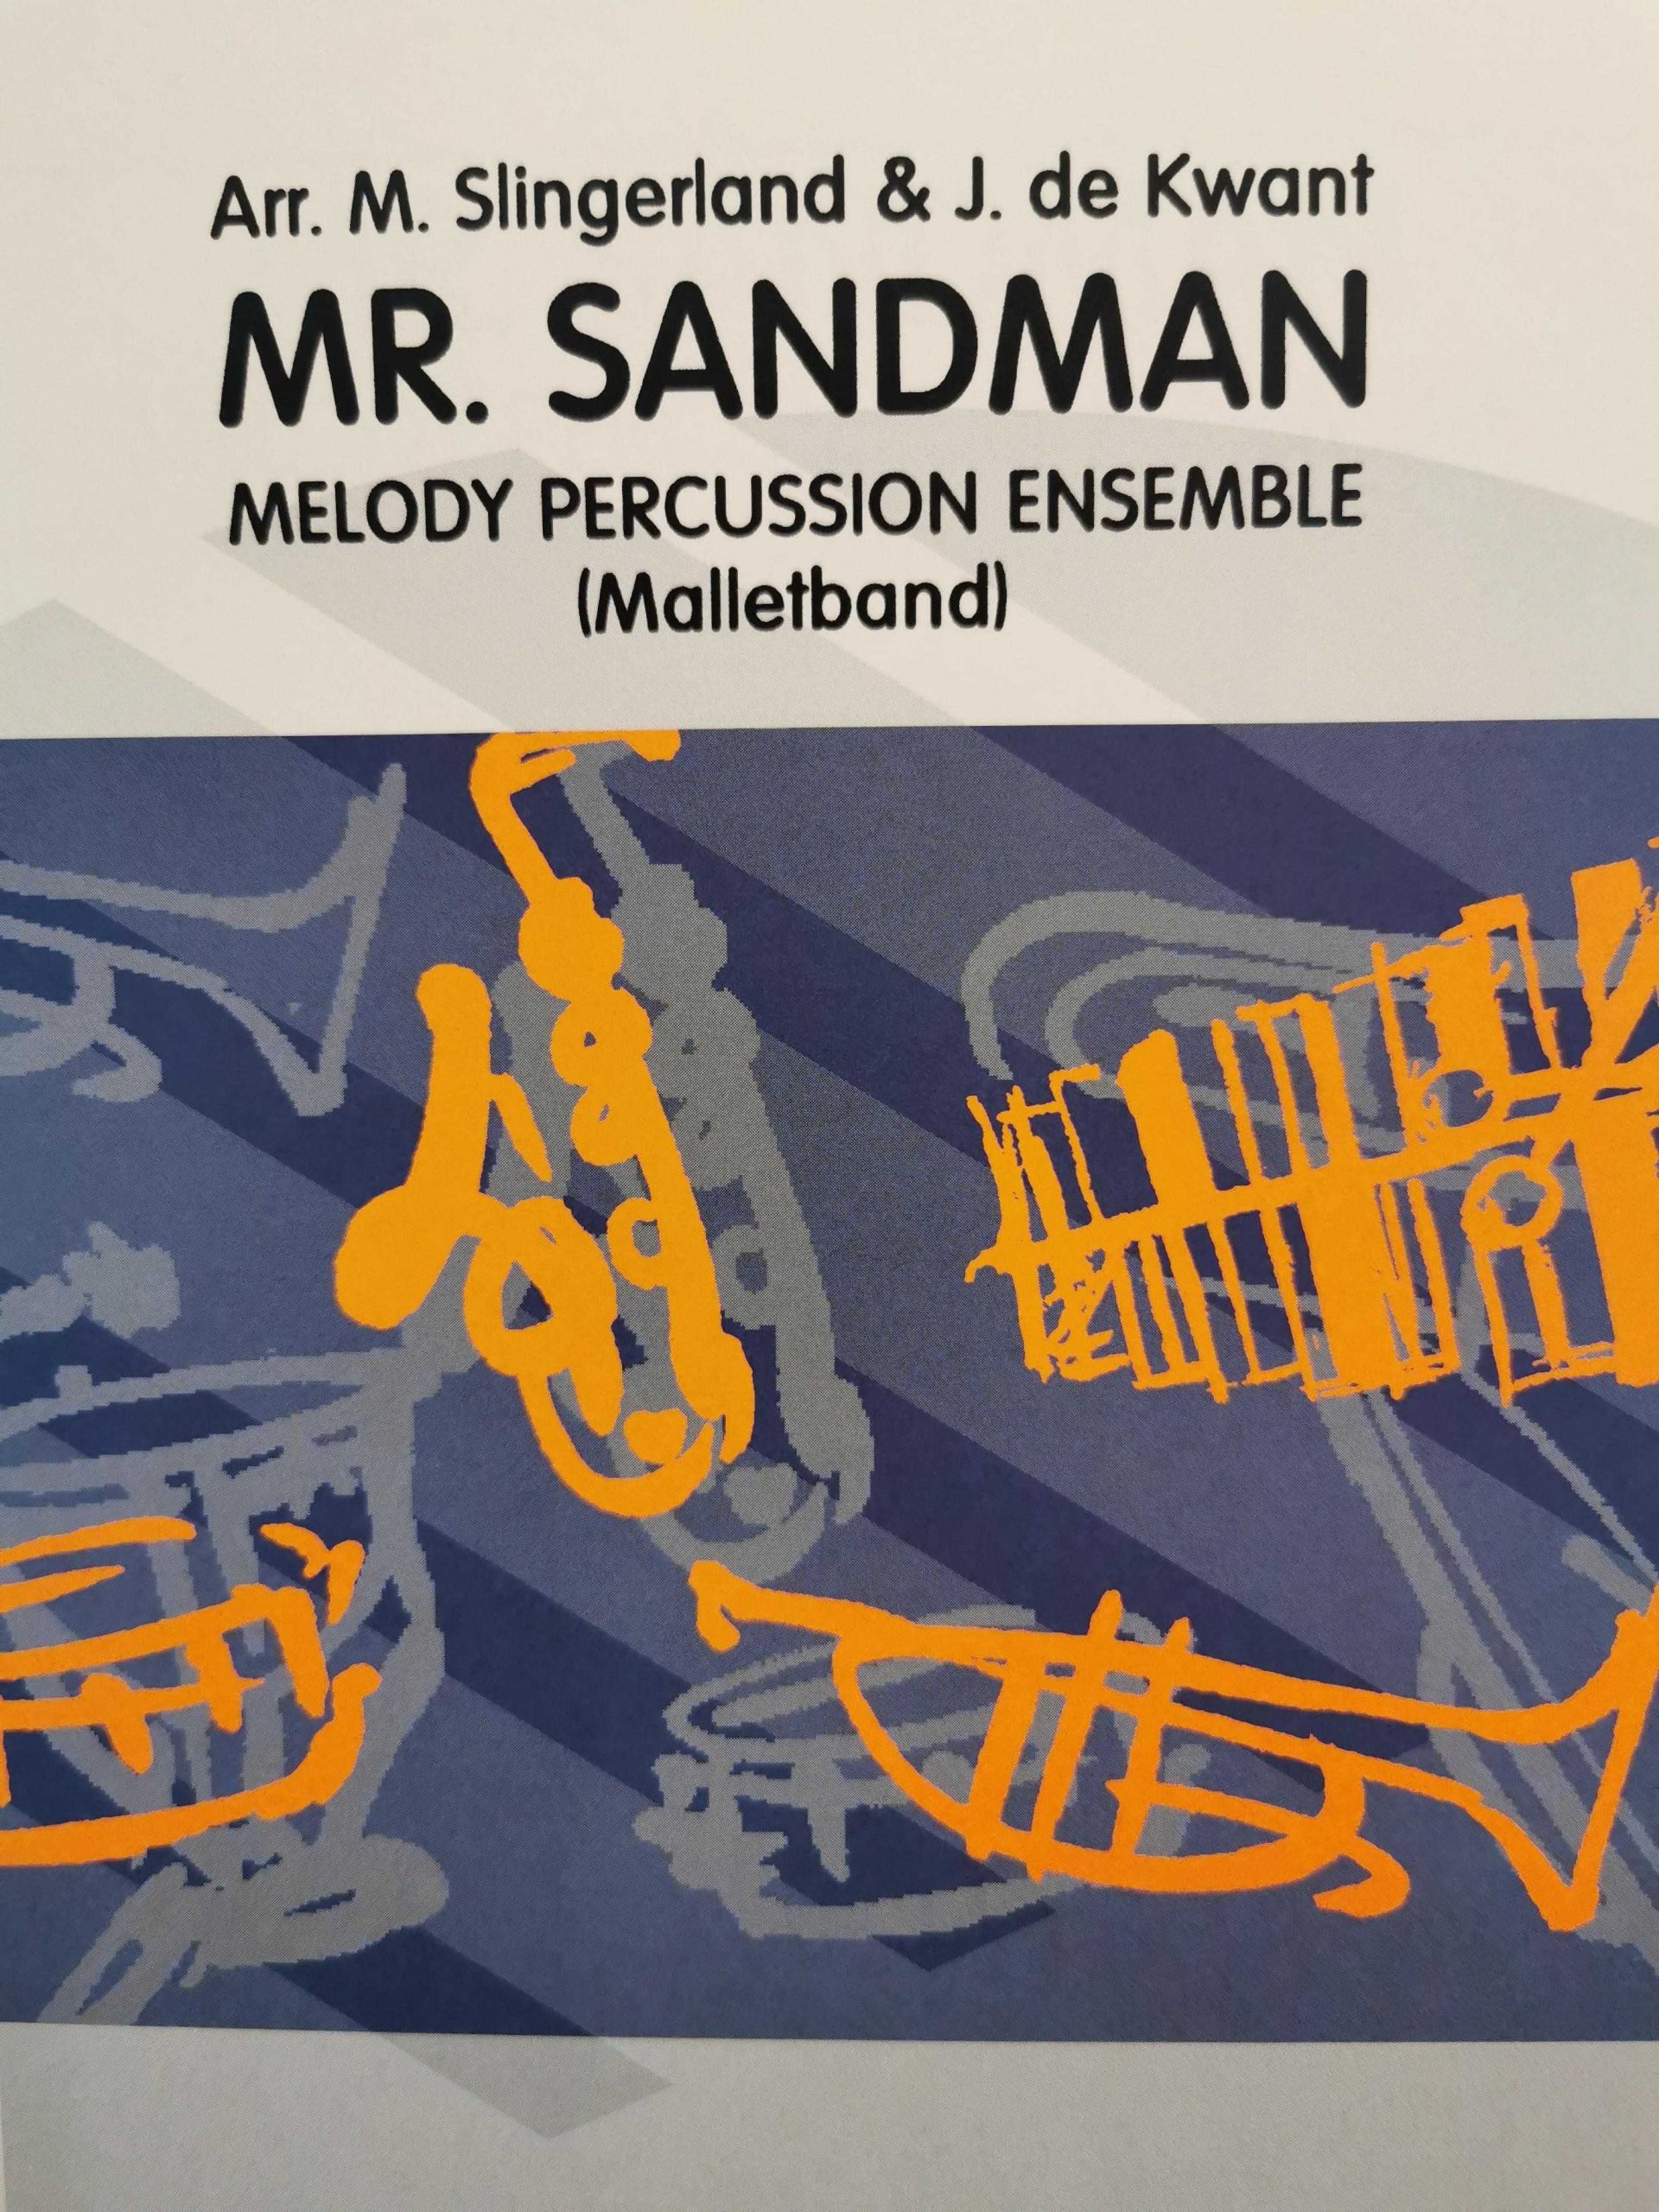 Mr. Sandman by Ballad arr. J. de Kwant